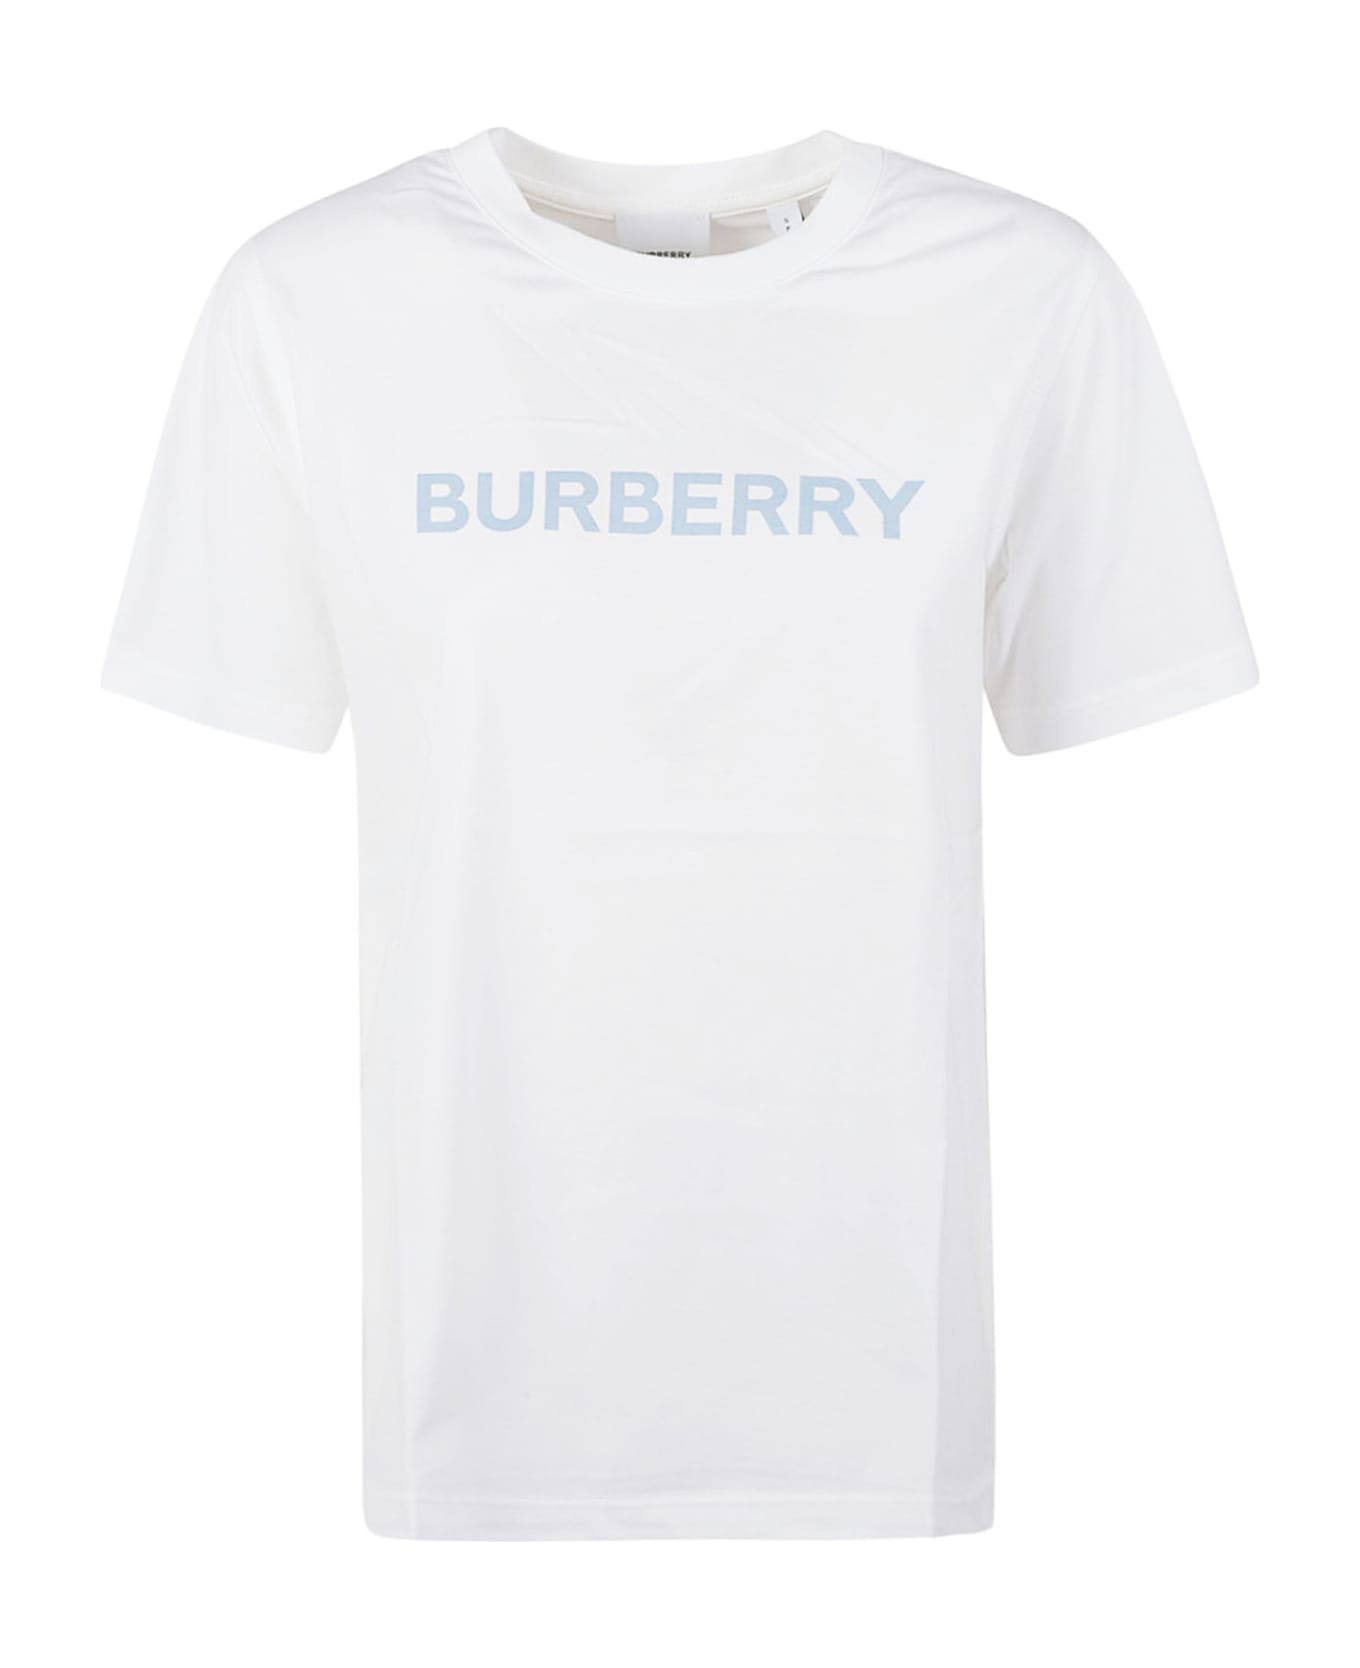 Burberry Margot T-shirt - White/blue